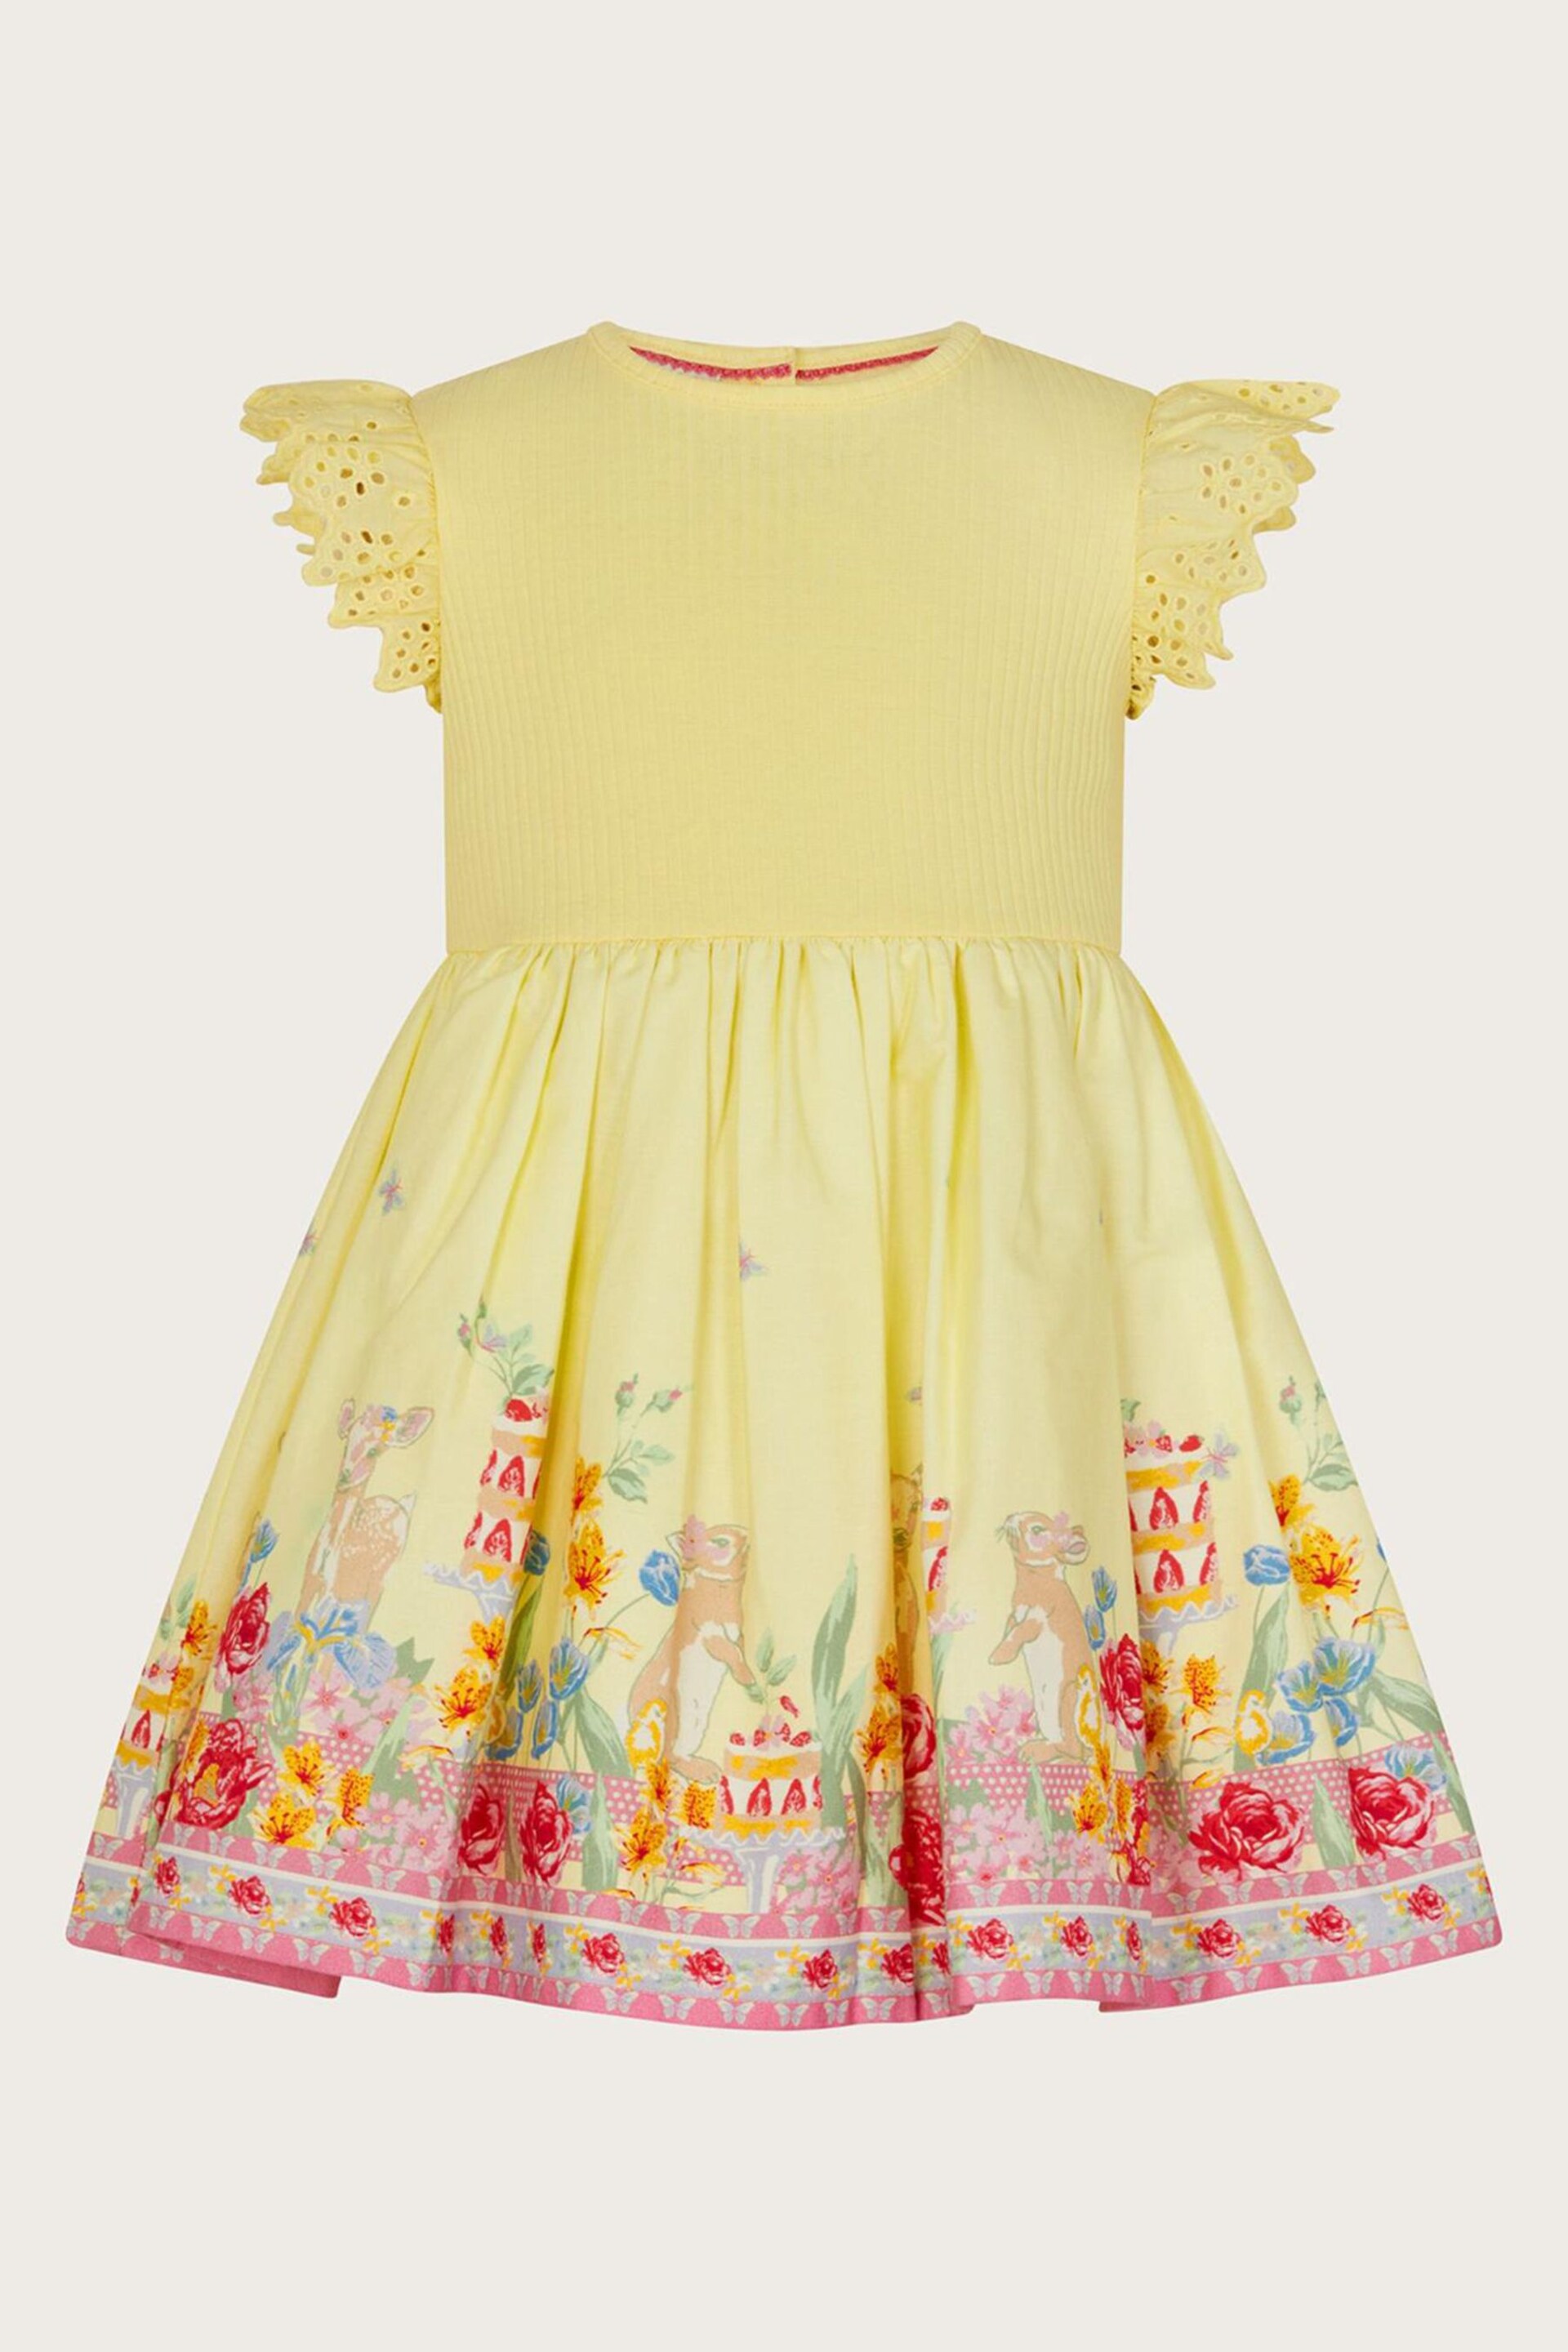 Monsoon Yellow 2-in-1 Tea Dress - Image 2 of 4